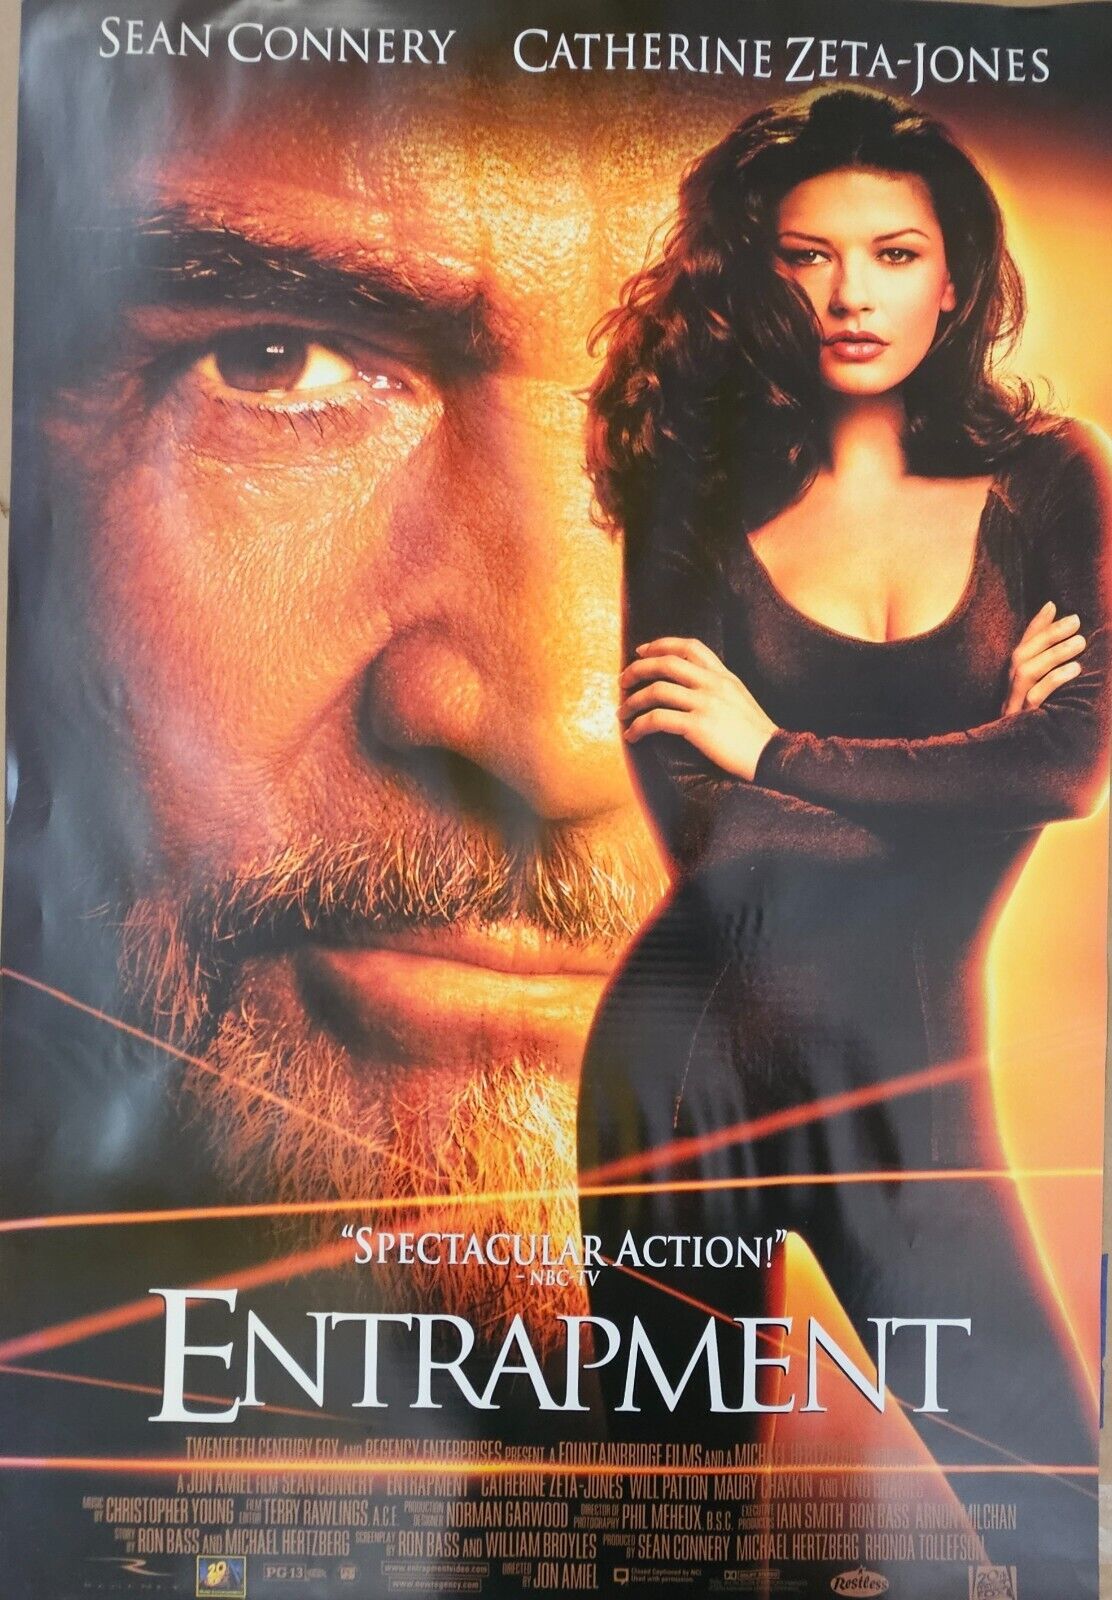 Sean Connery and Catherine Zeta-Jones in ENTRAPMENT 27 X 40  MOVIE POSTER